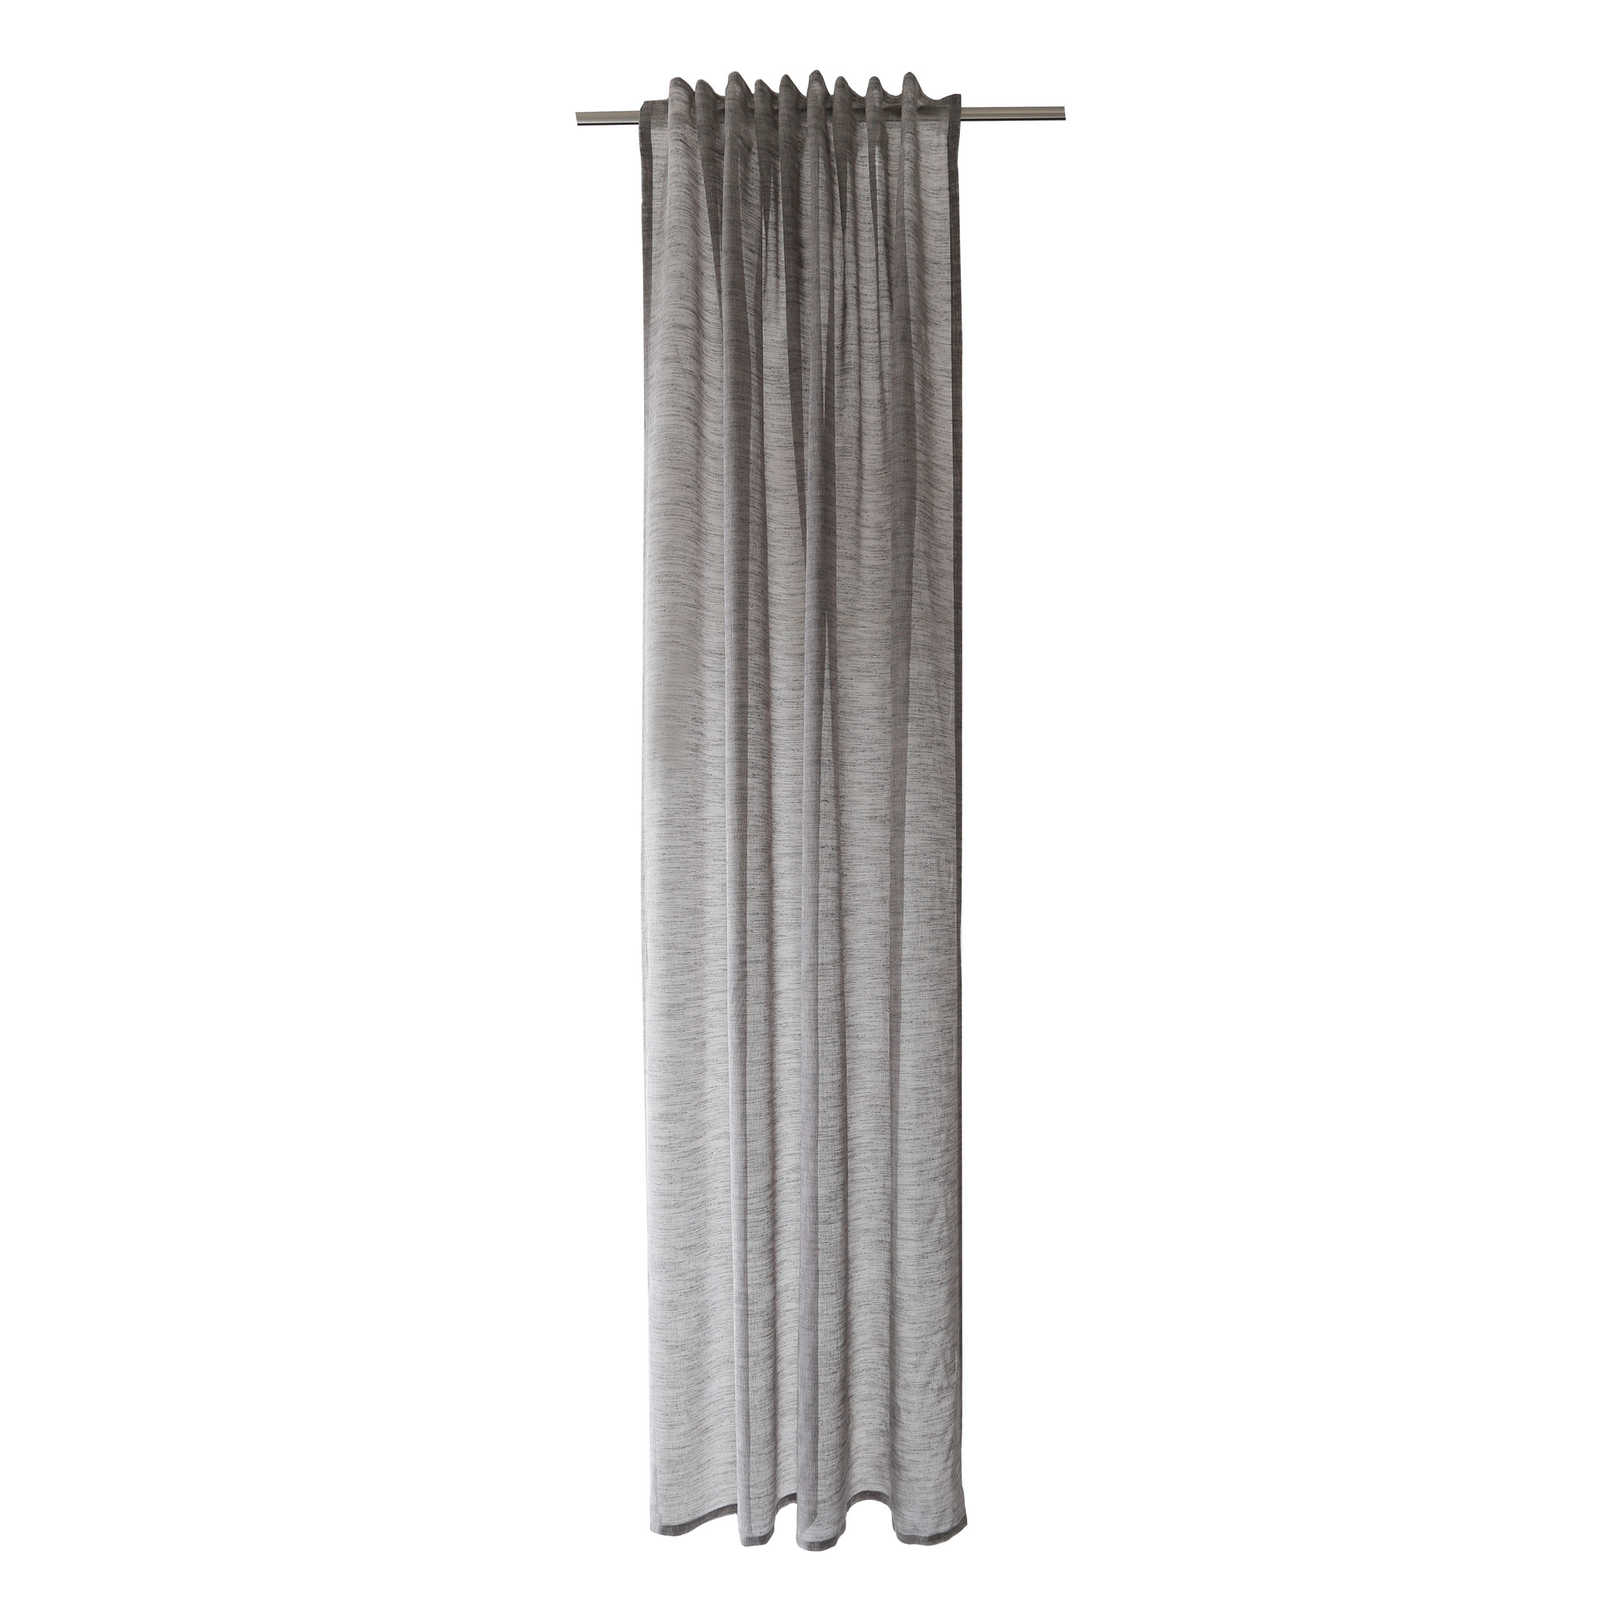         Bufanda lazo decorativa 140 cm x 245 cm fibra sintética antracita
    